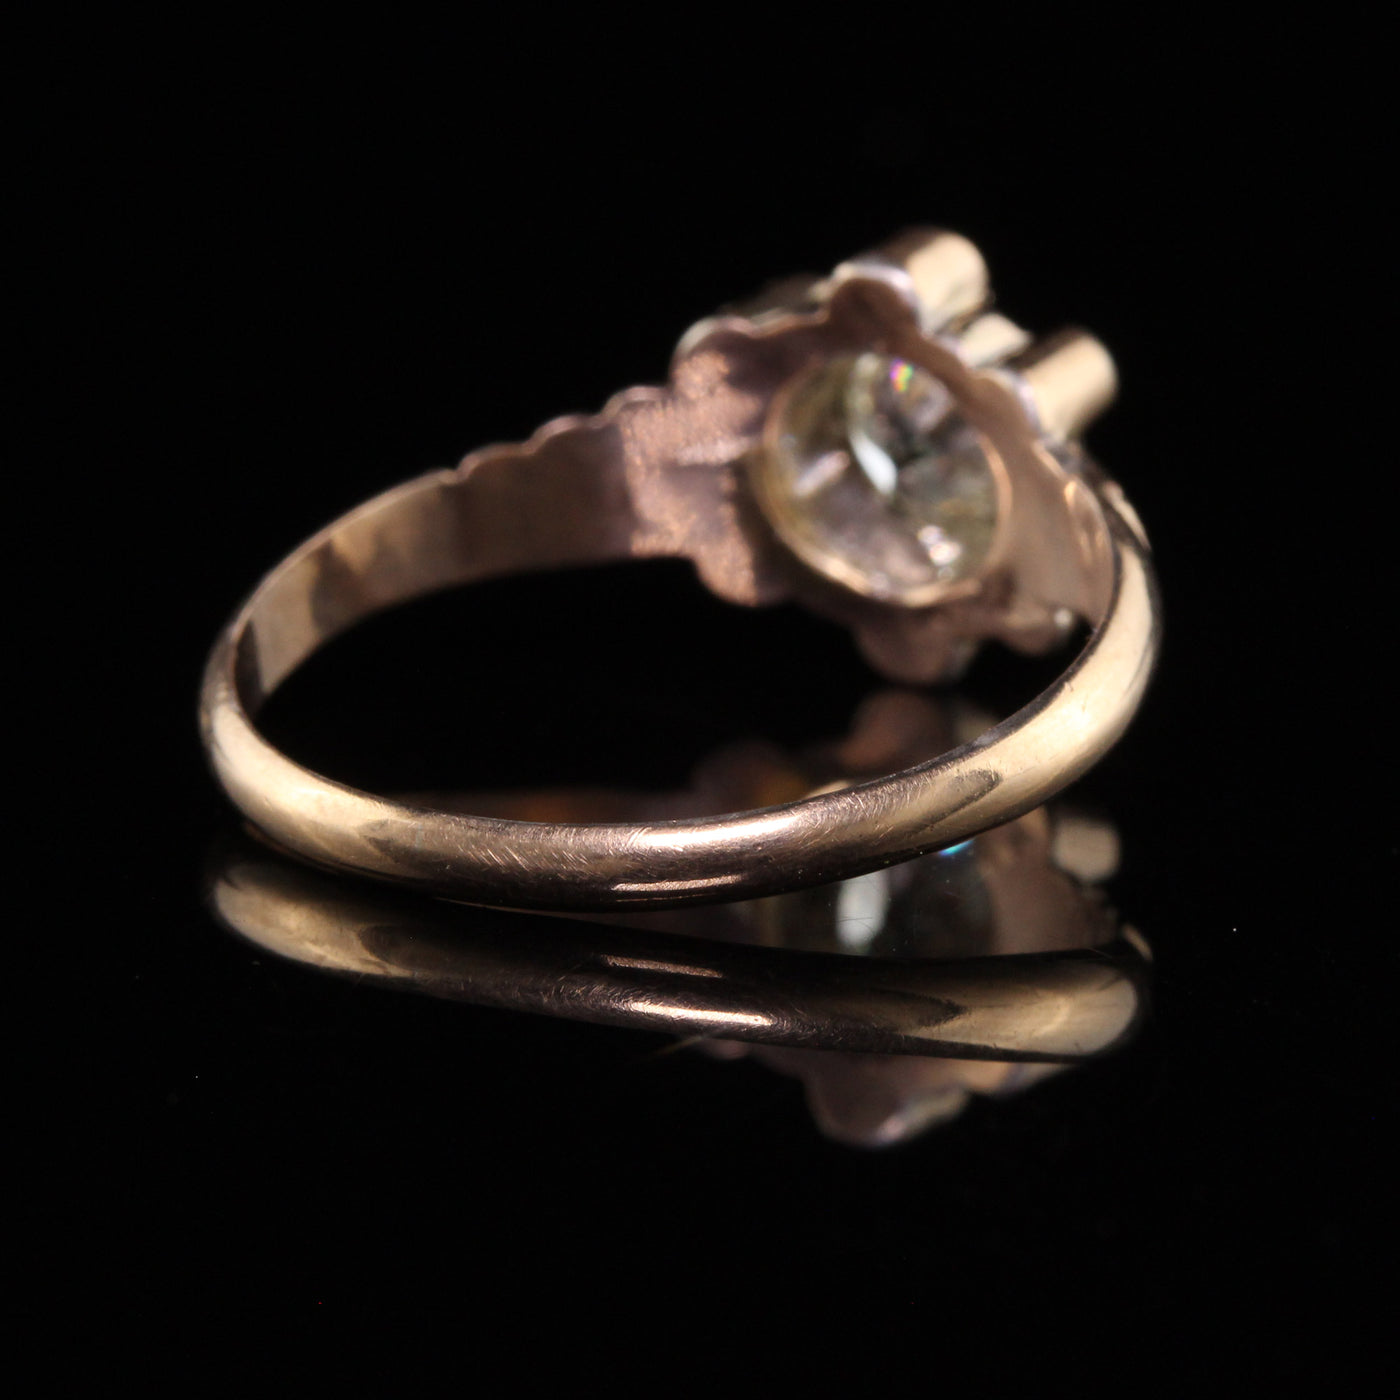 Antique Victorian 14K Yellow Gold Old European Diamond Engagement Ring - GIA